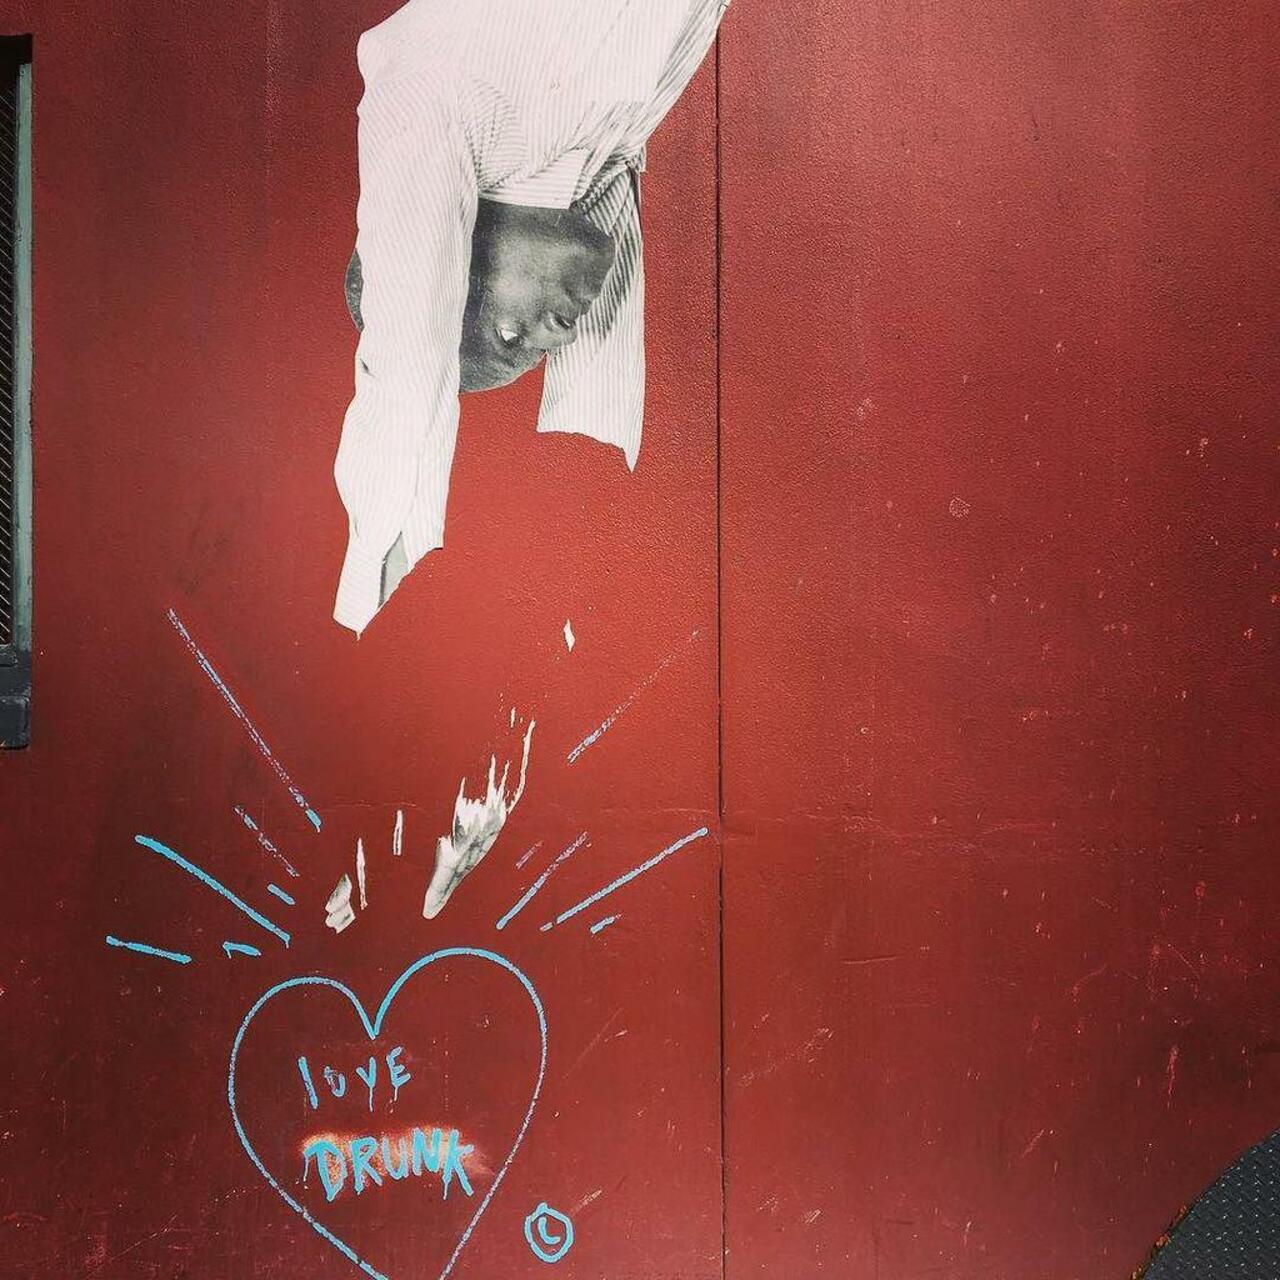 #nyctags #nycgraffiti #nycstreetart #nycgraffart #graffiti #graffitiwalls #tags #streetart #streetartnyc #instagraf… http://t.co/NaOUiLIdNC